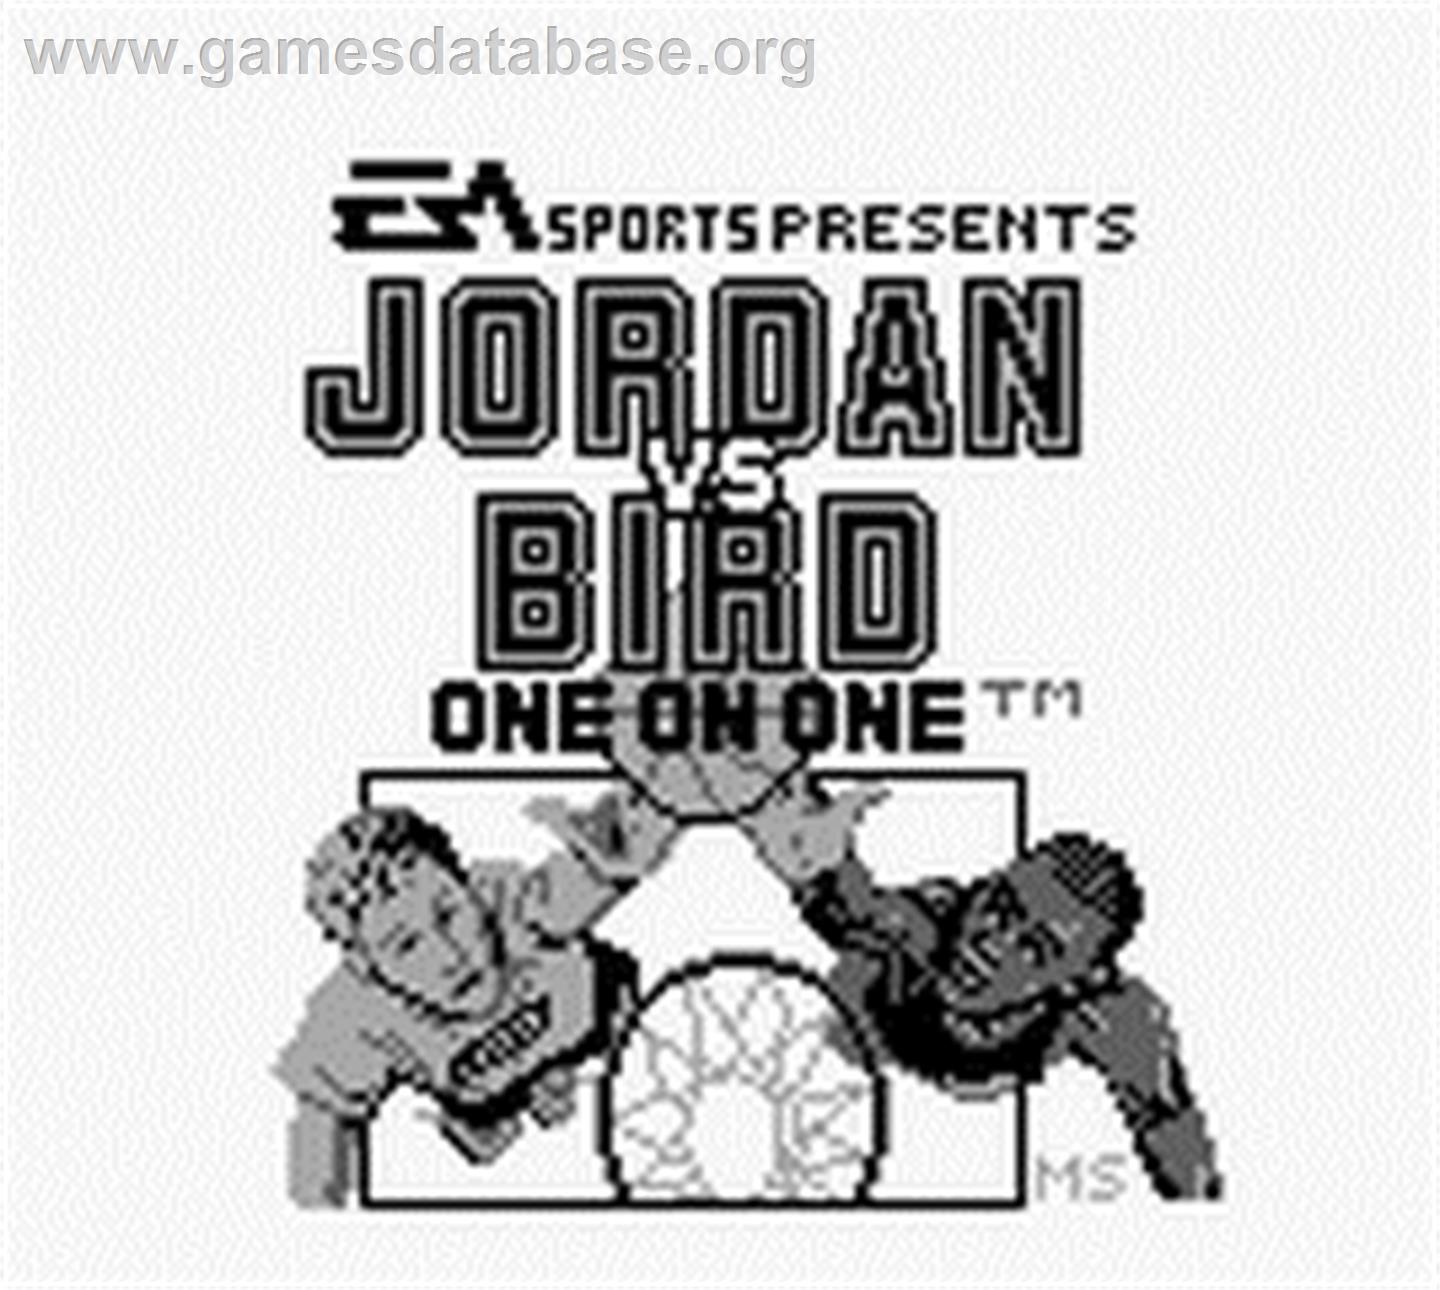 Jordan vs. Bird: One-on-One - Nintendo Game Boy - Artwork - Title Screen